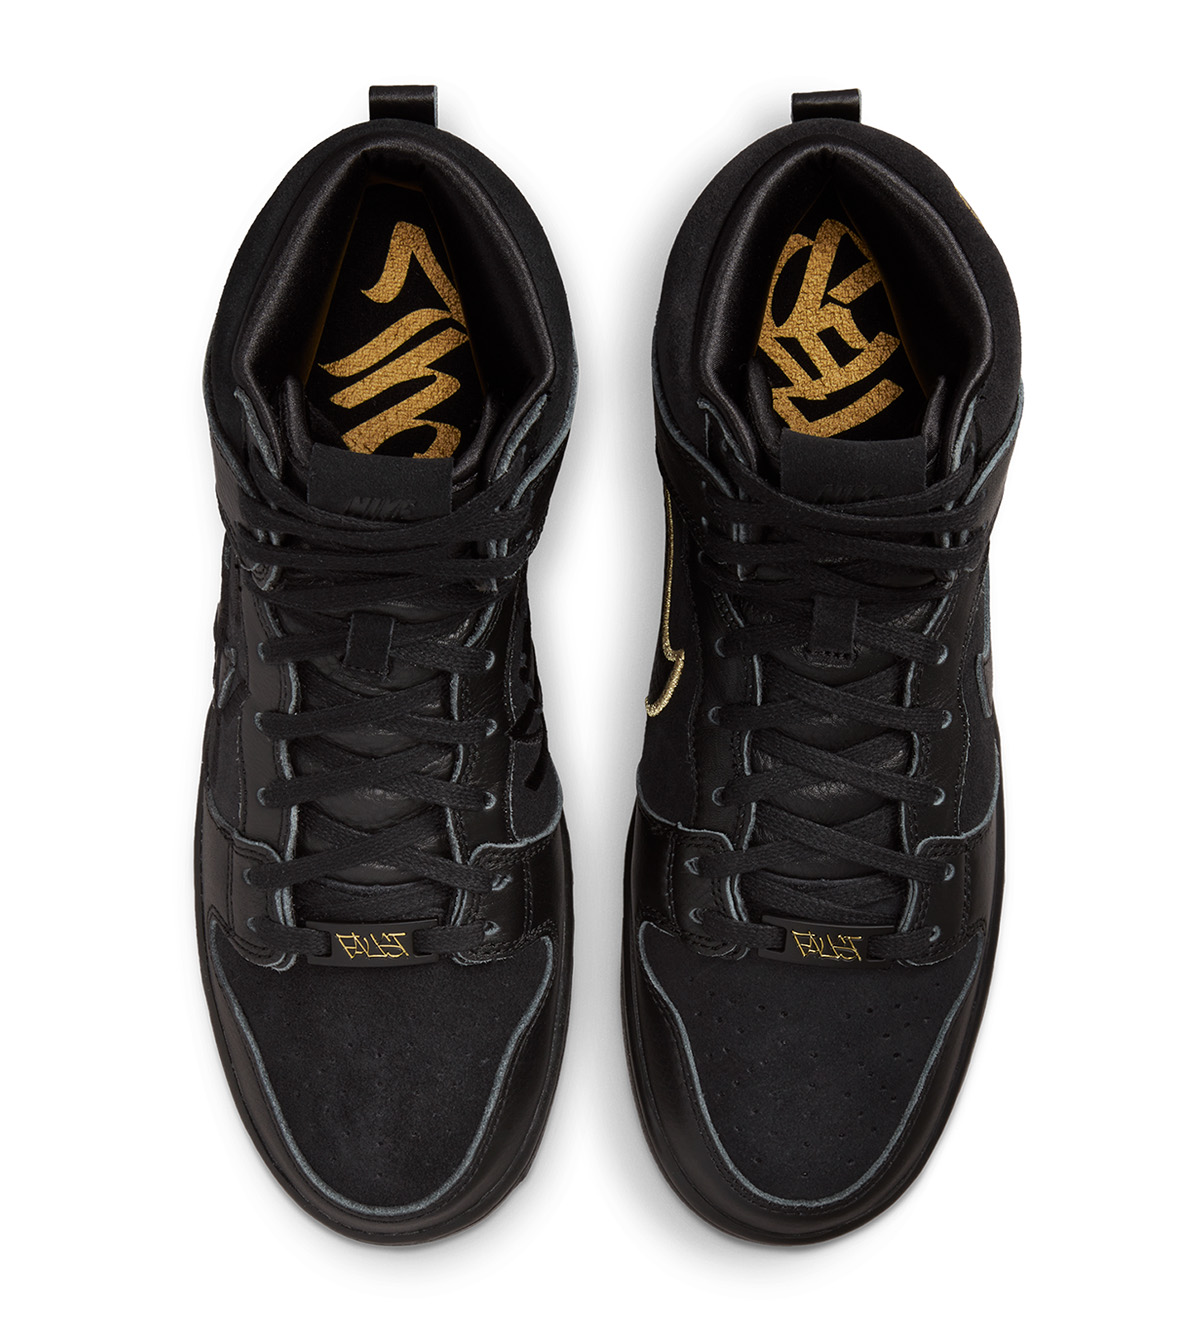 FAUST Nike SB Dunk High Black Metallic Gold DH7755-001 Release Date